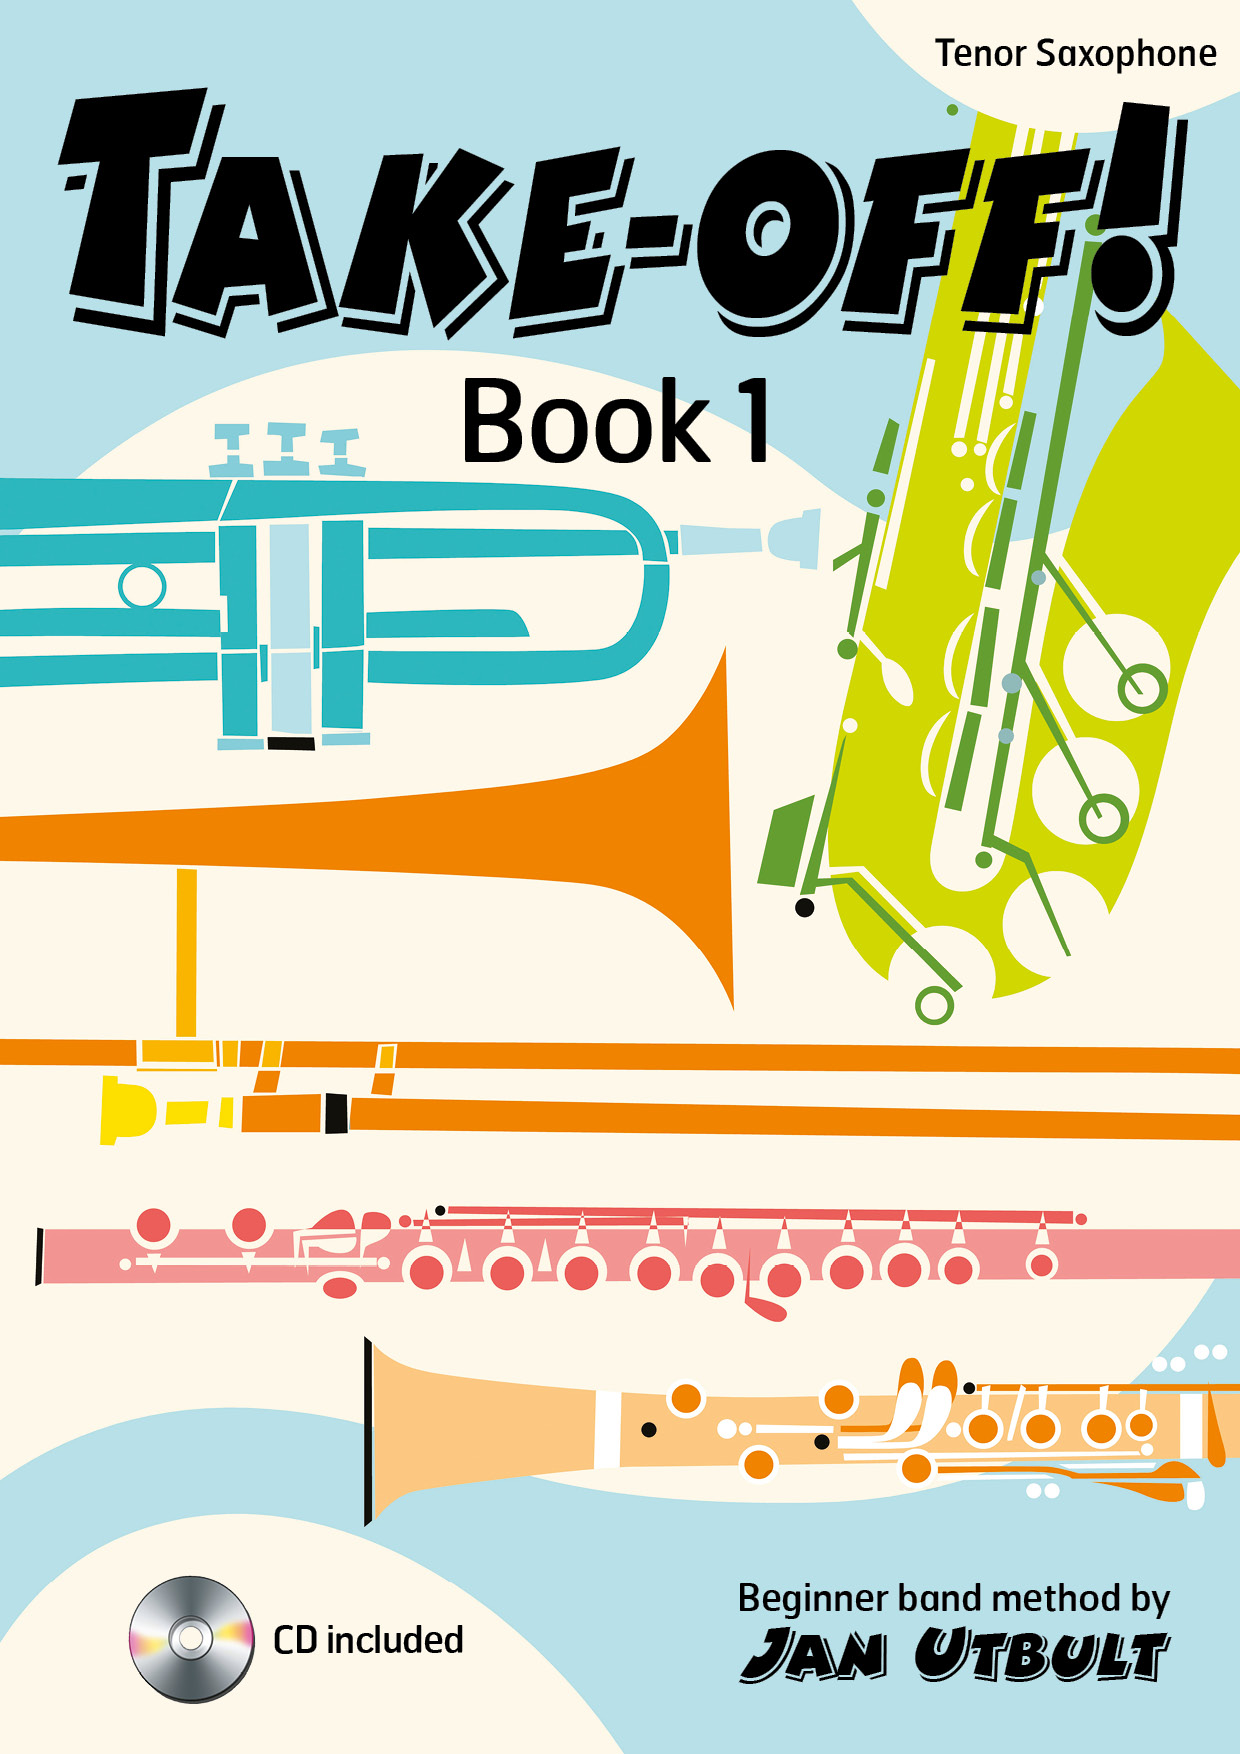 Take-off! 1- Tenor Saxophone